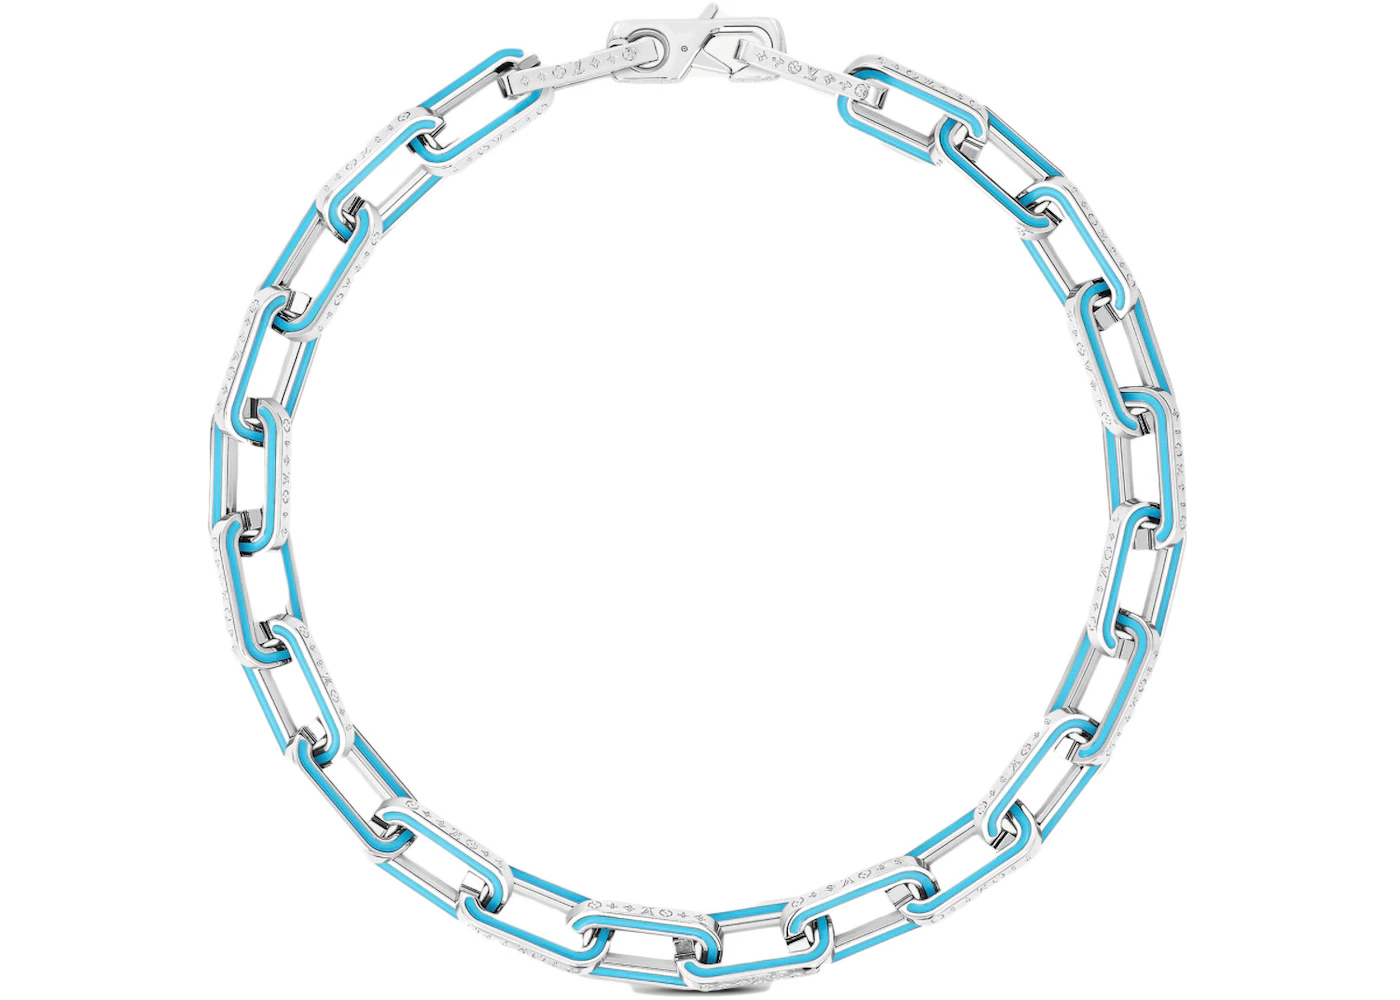 Silver Flat Curb Link Chain + Louis Vuitton Lock & Key – Haus of